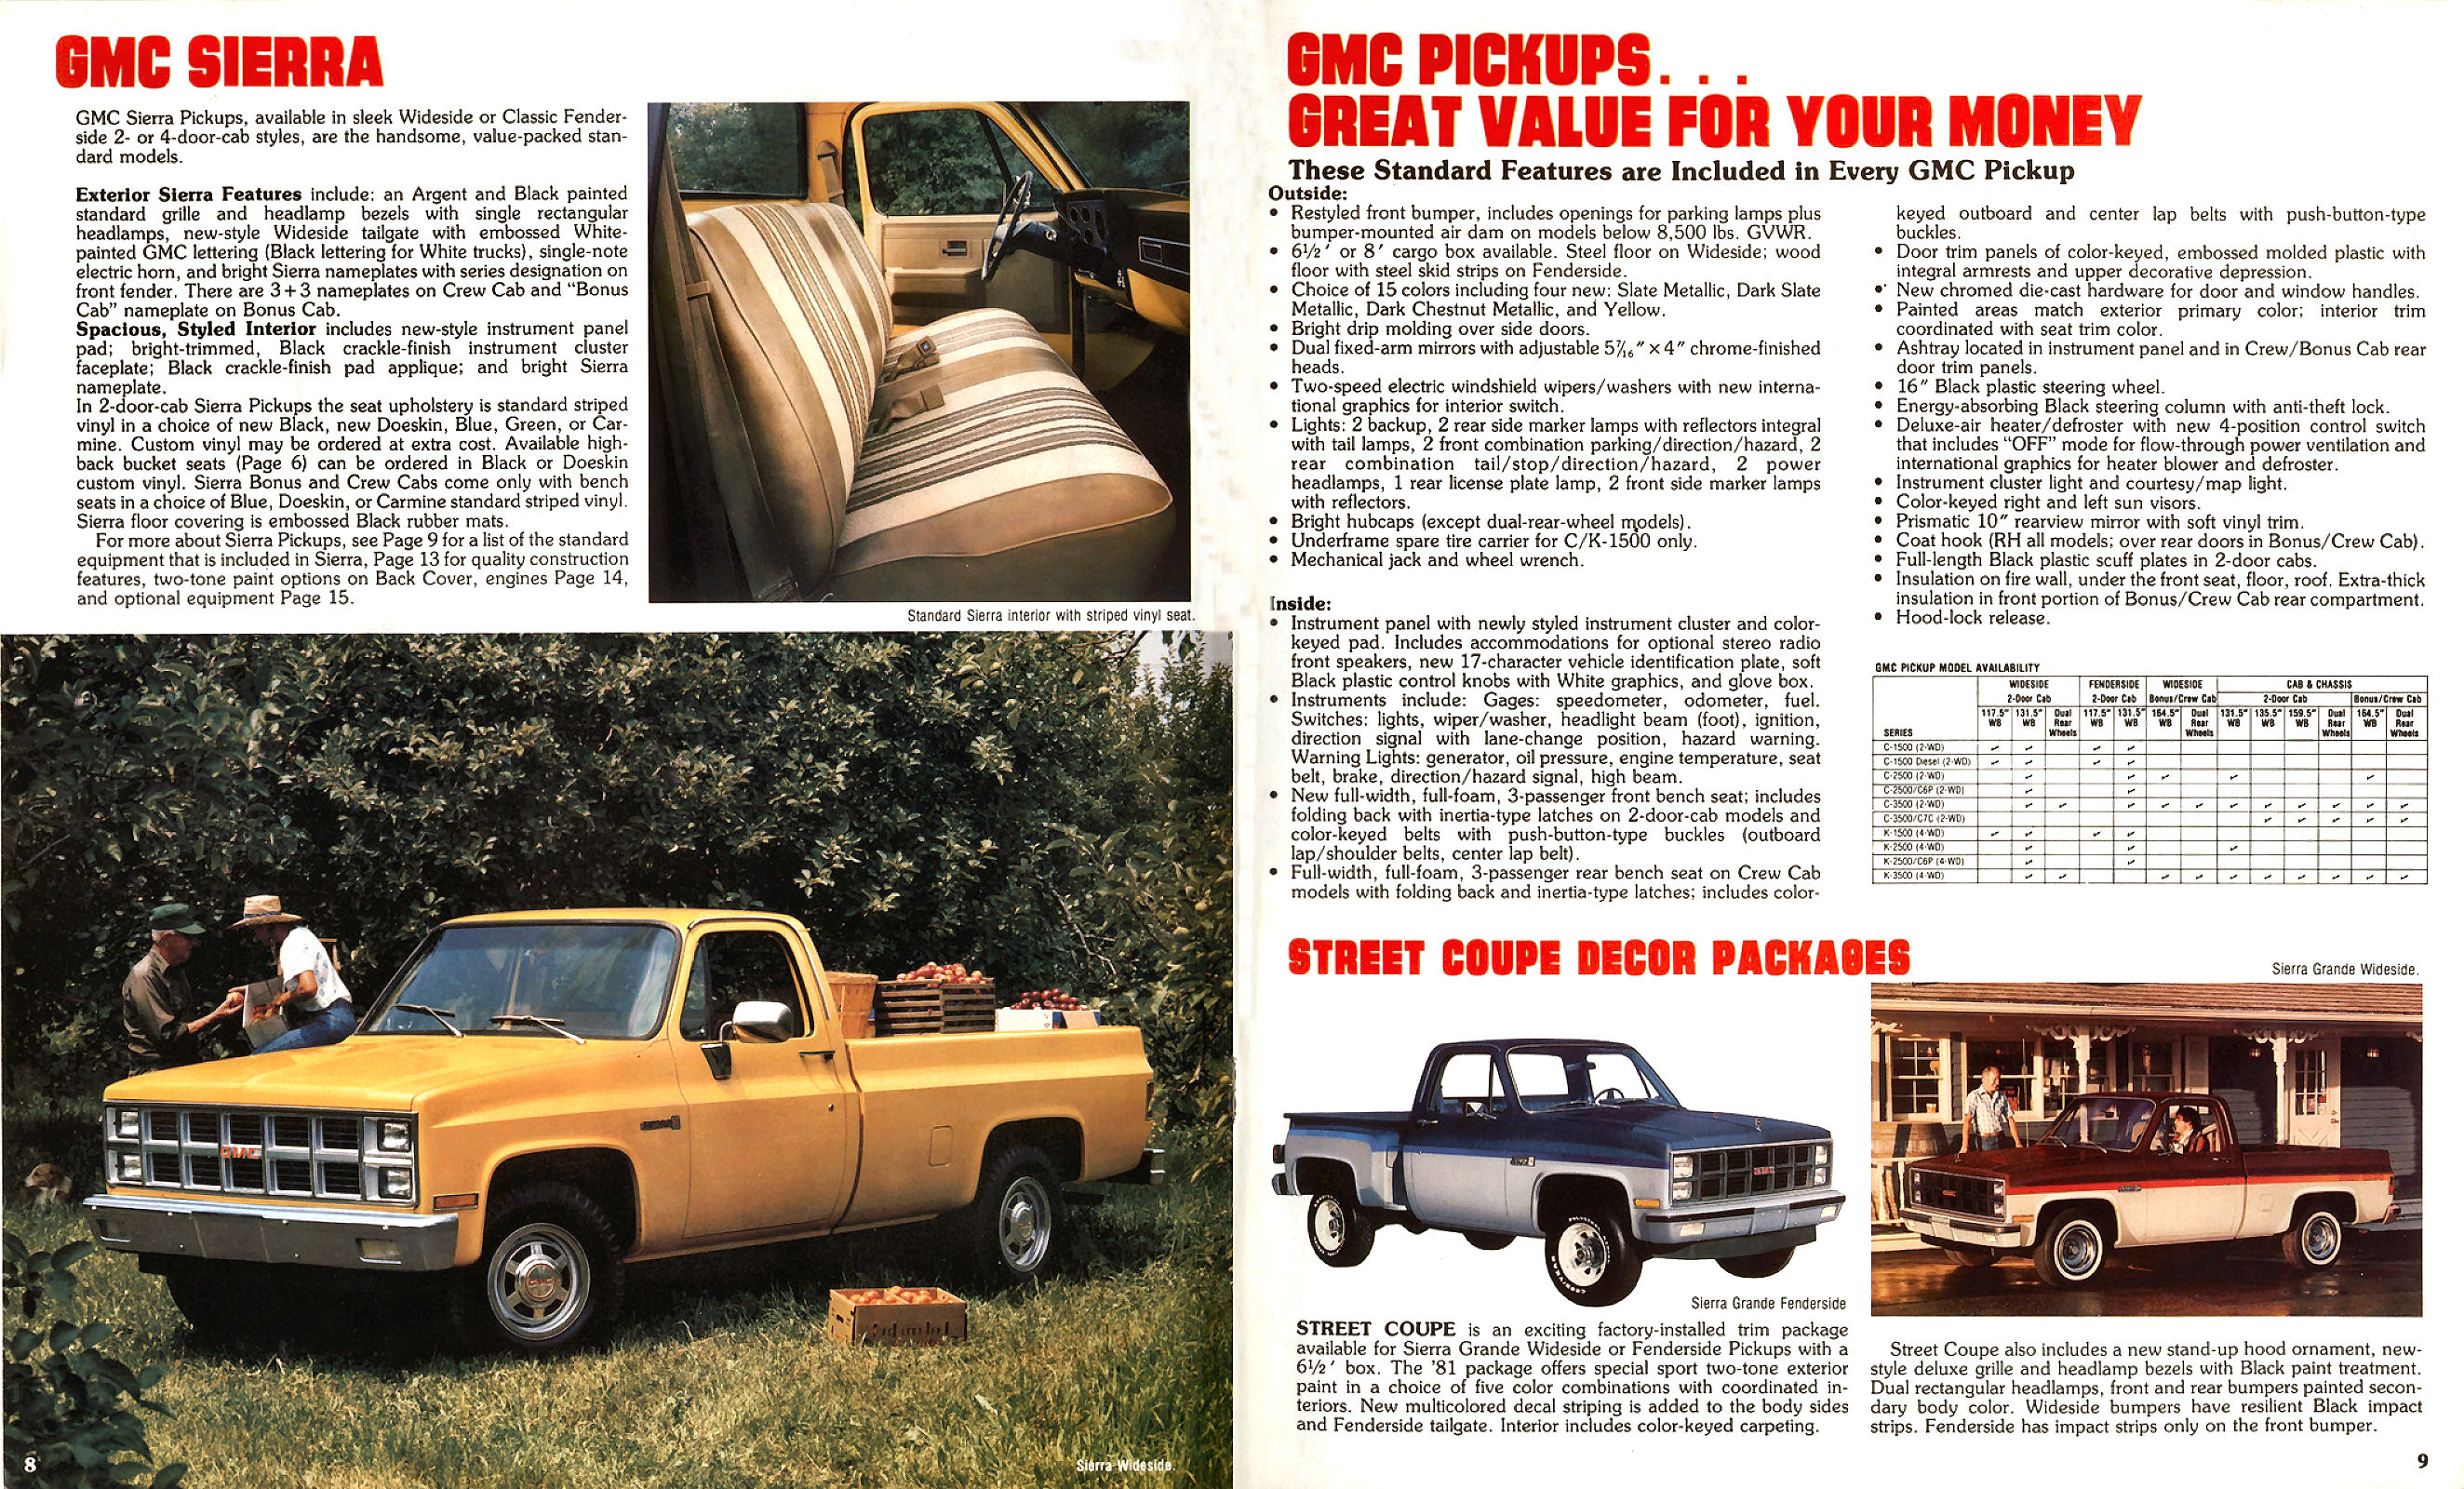 1981 GMC Pickups-08-09